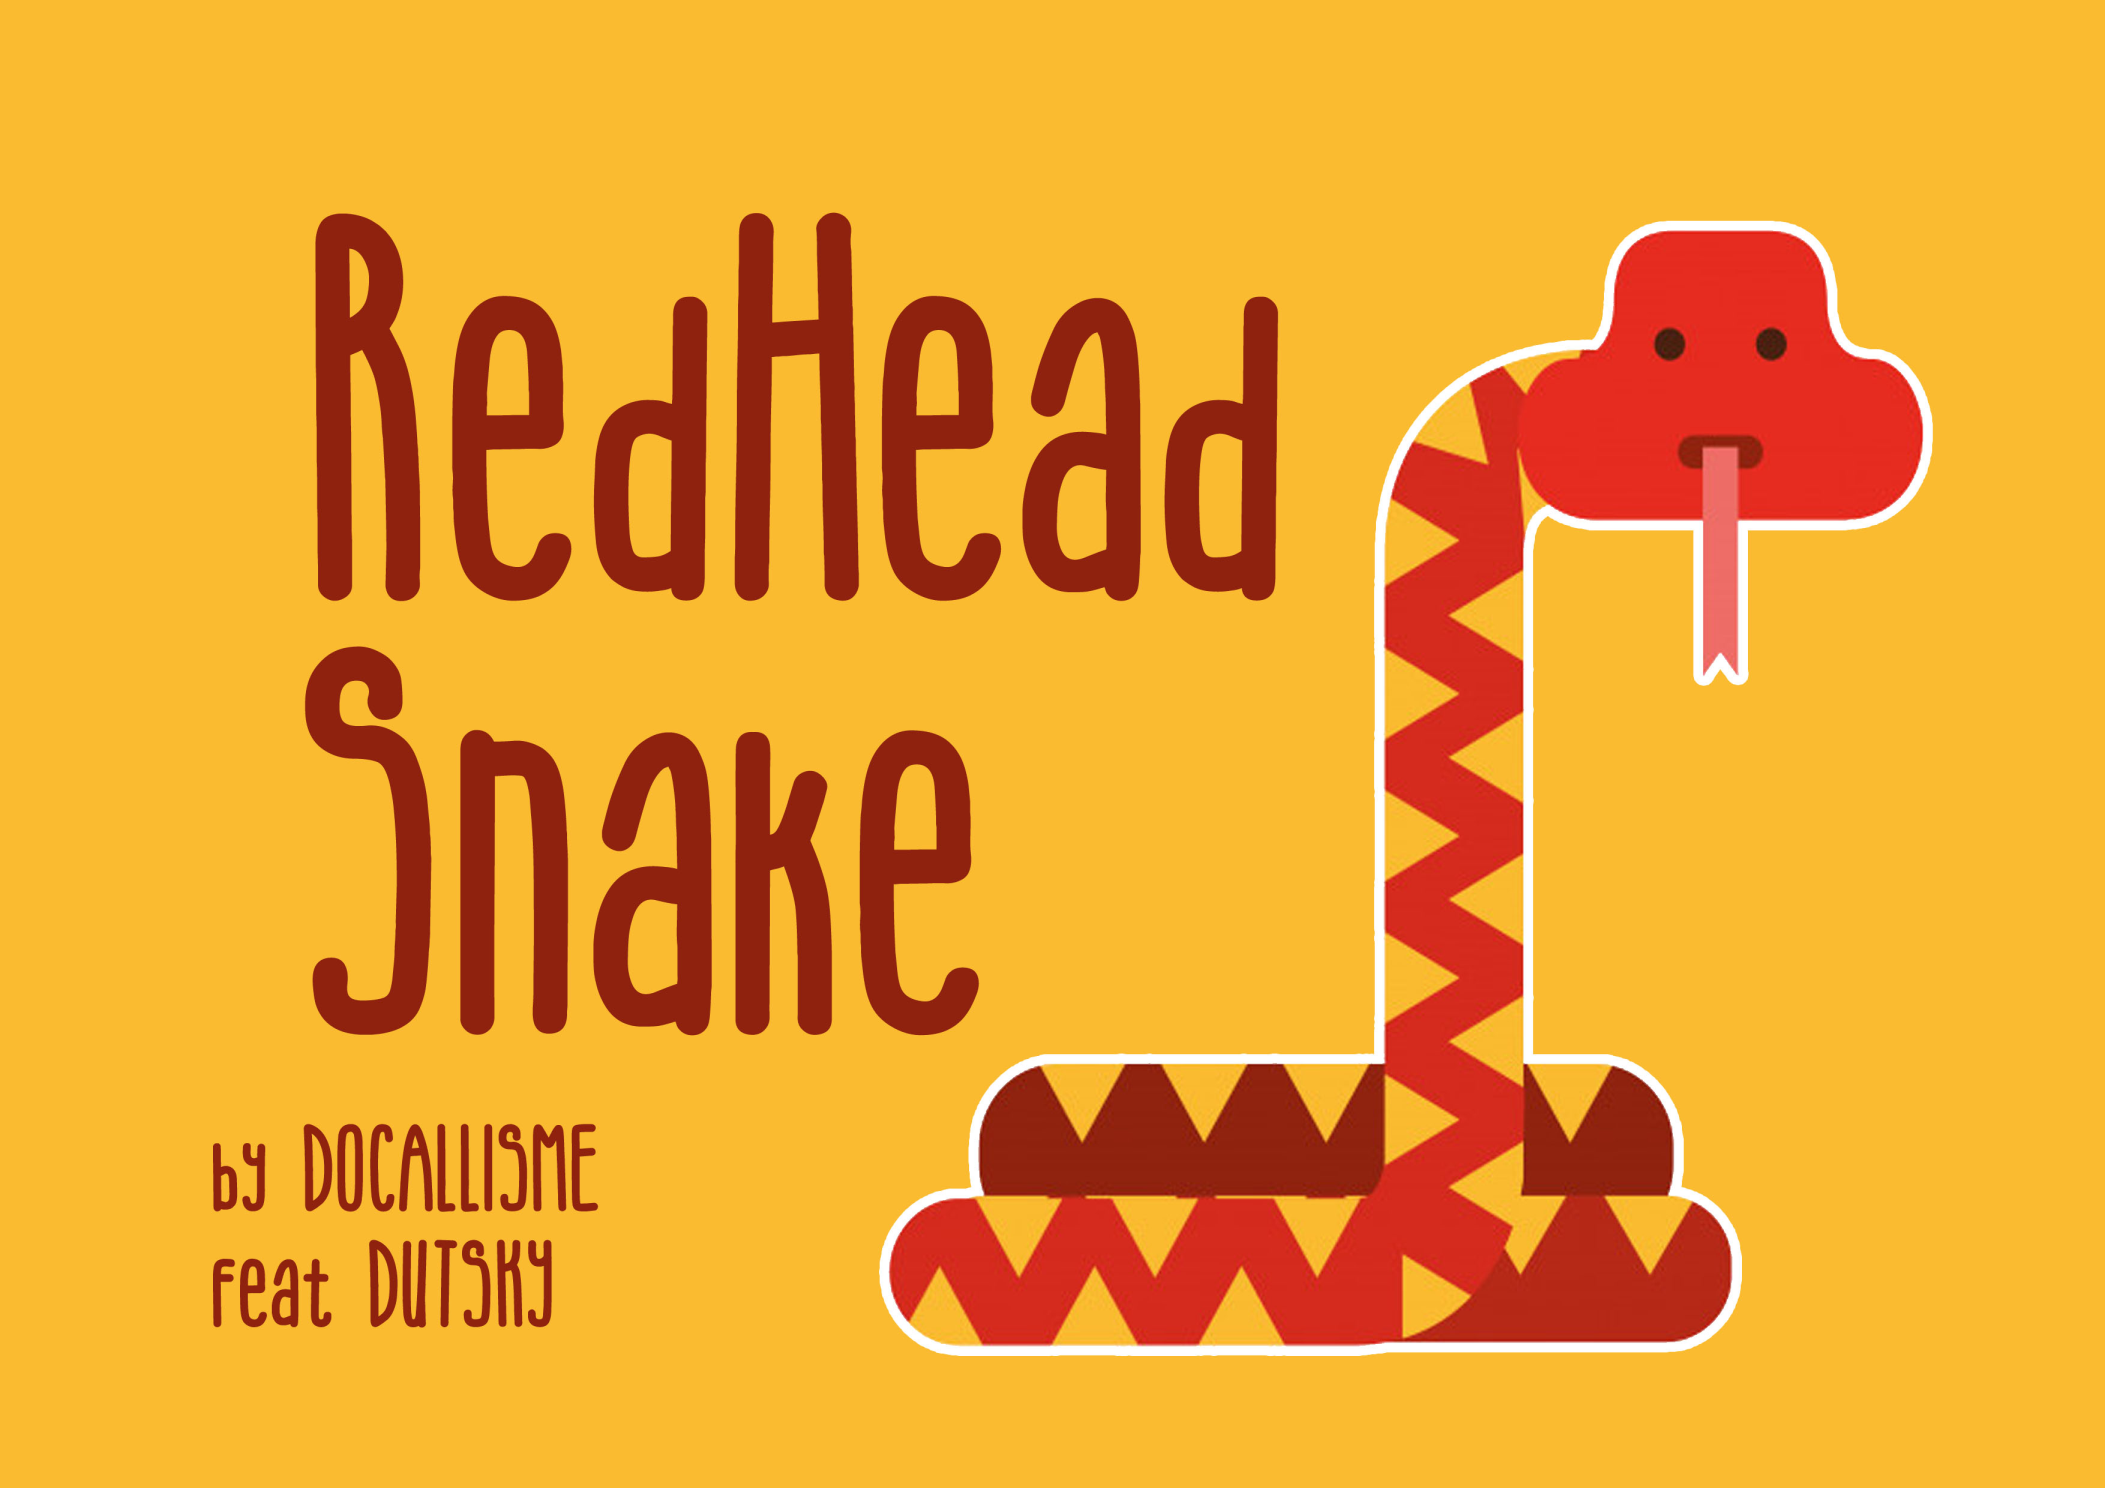 RedHead Snake font